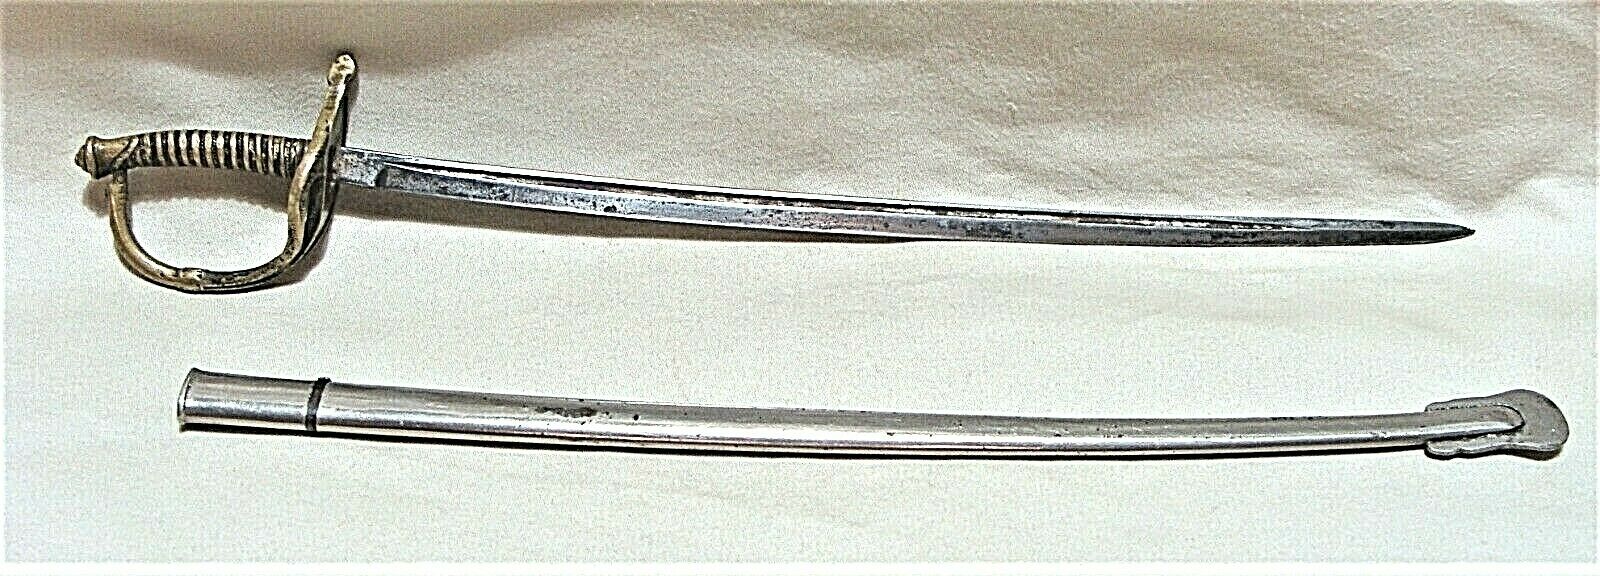 Vintage Miniature Civil War Military Cavalry Sword 9" Long W/ Scabbard